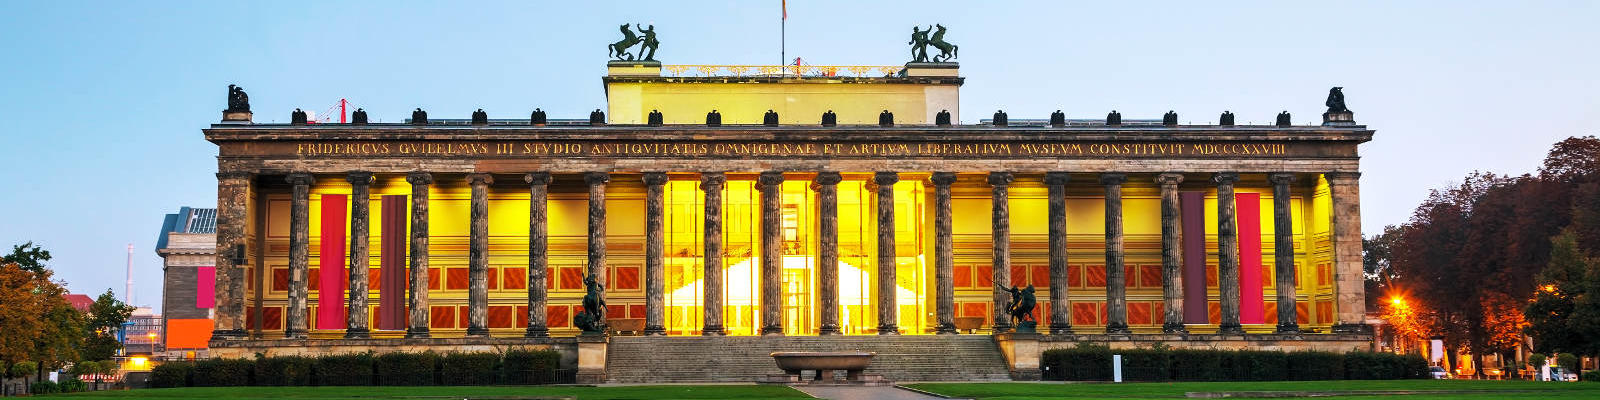 Altes museum berlin exterior